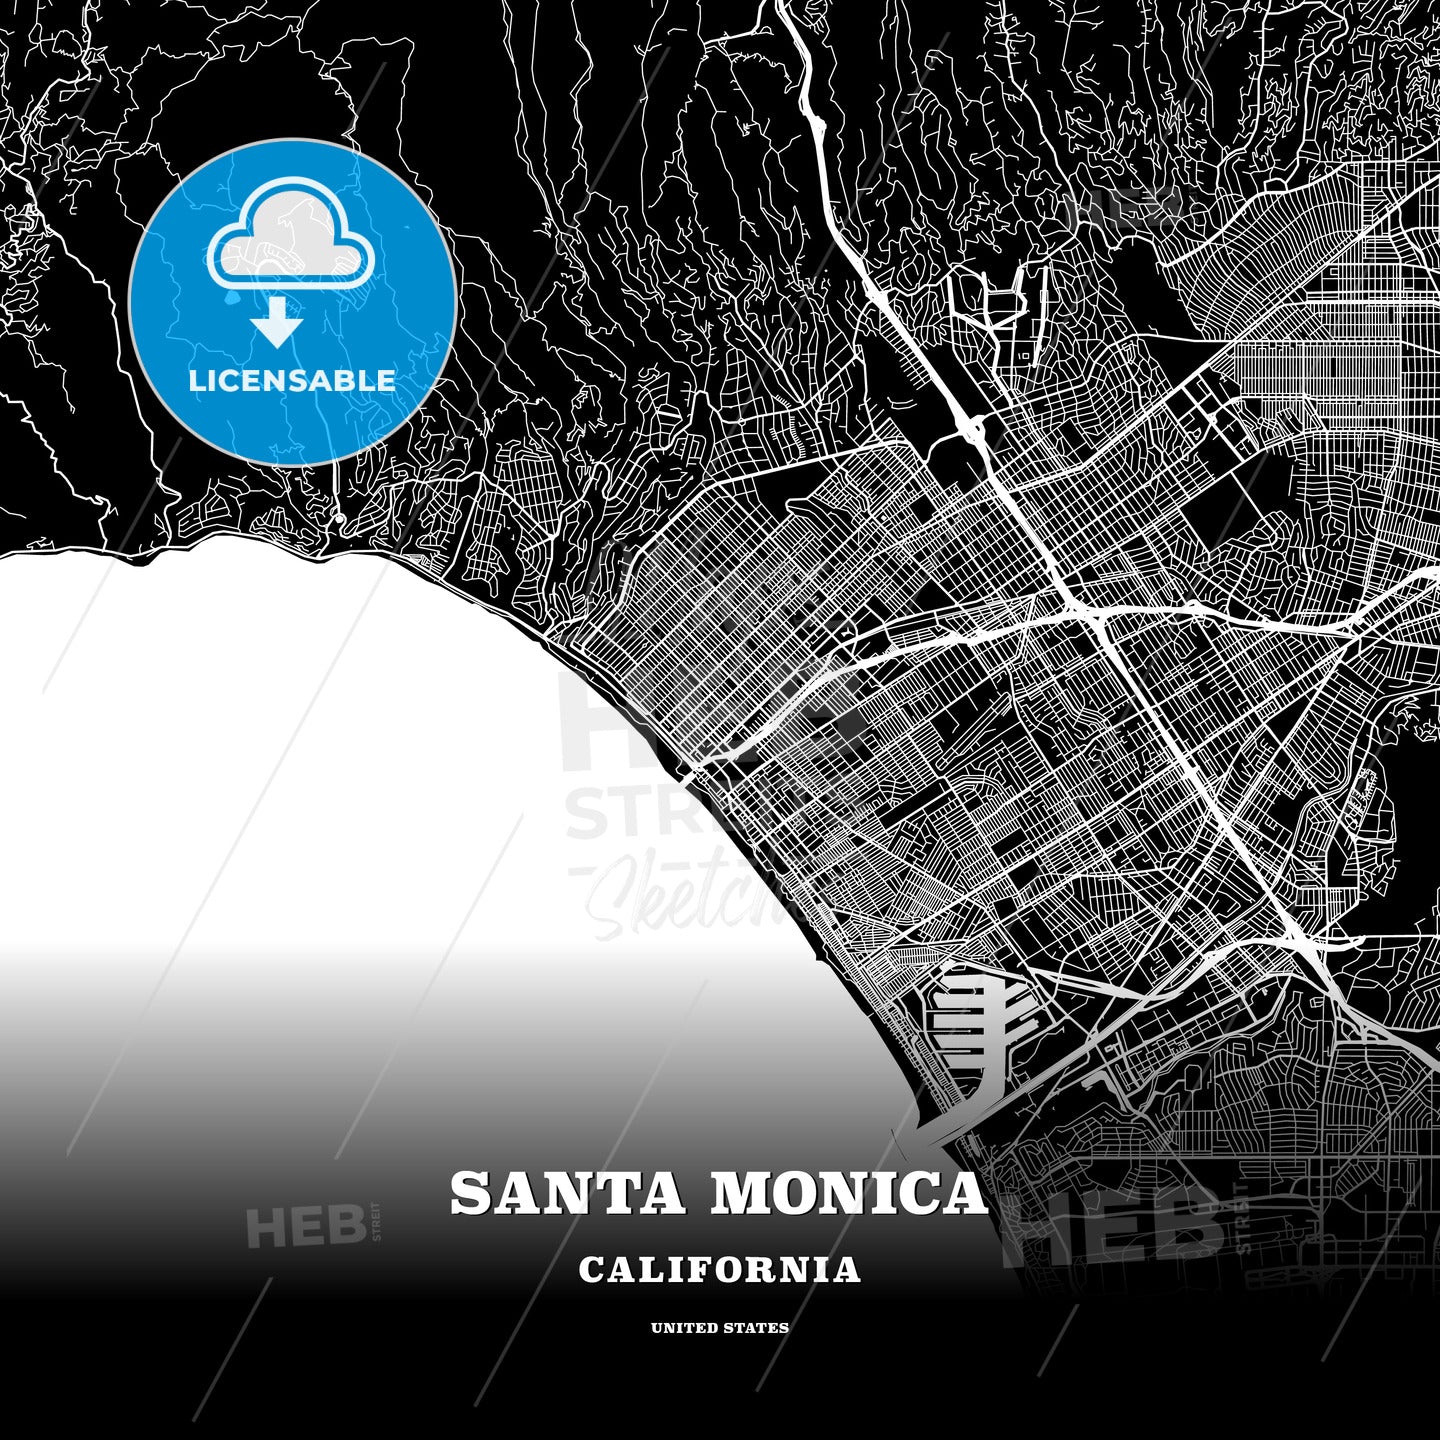 Santa Monica, California, USA map